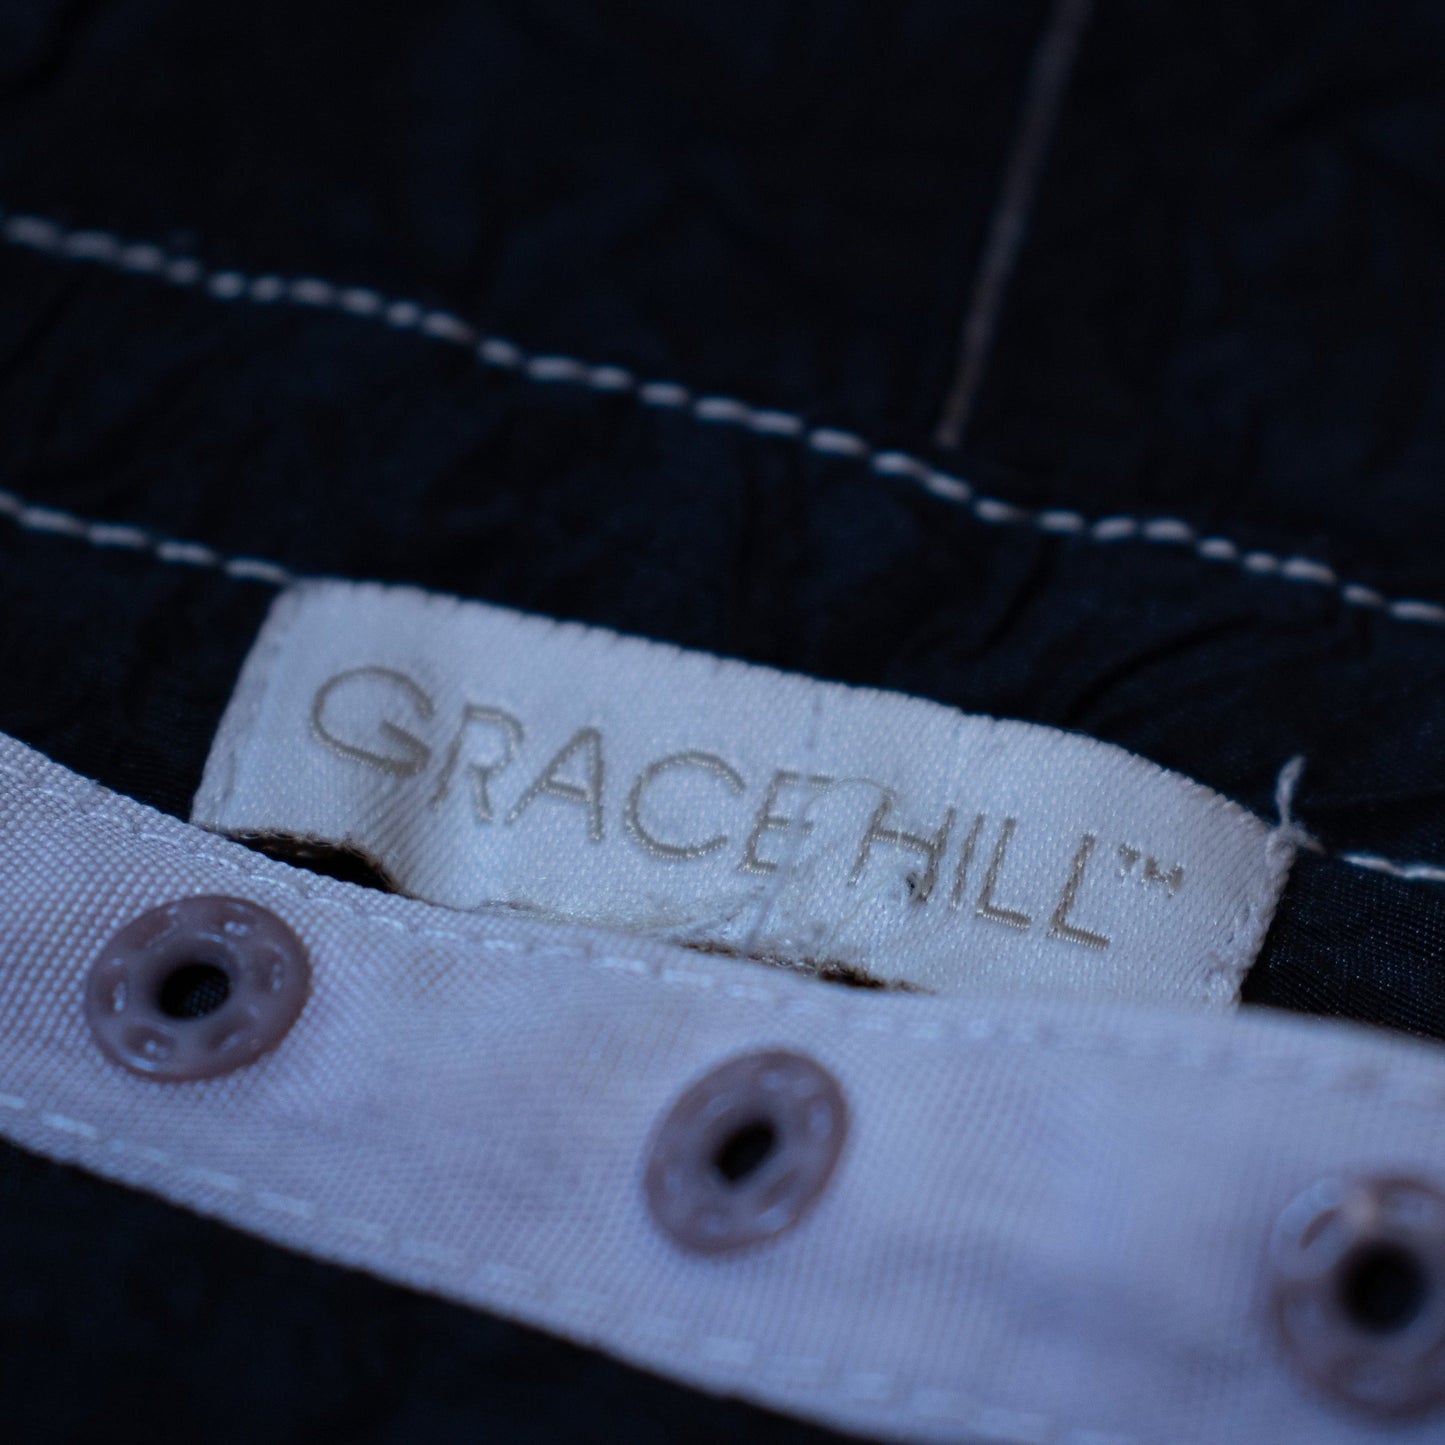 Grace Hill - Skirt Skirts